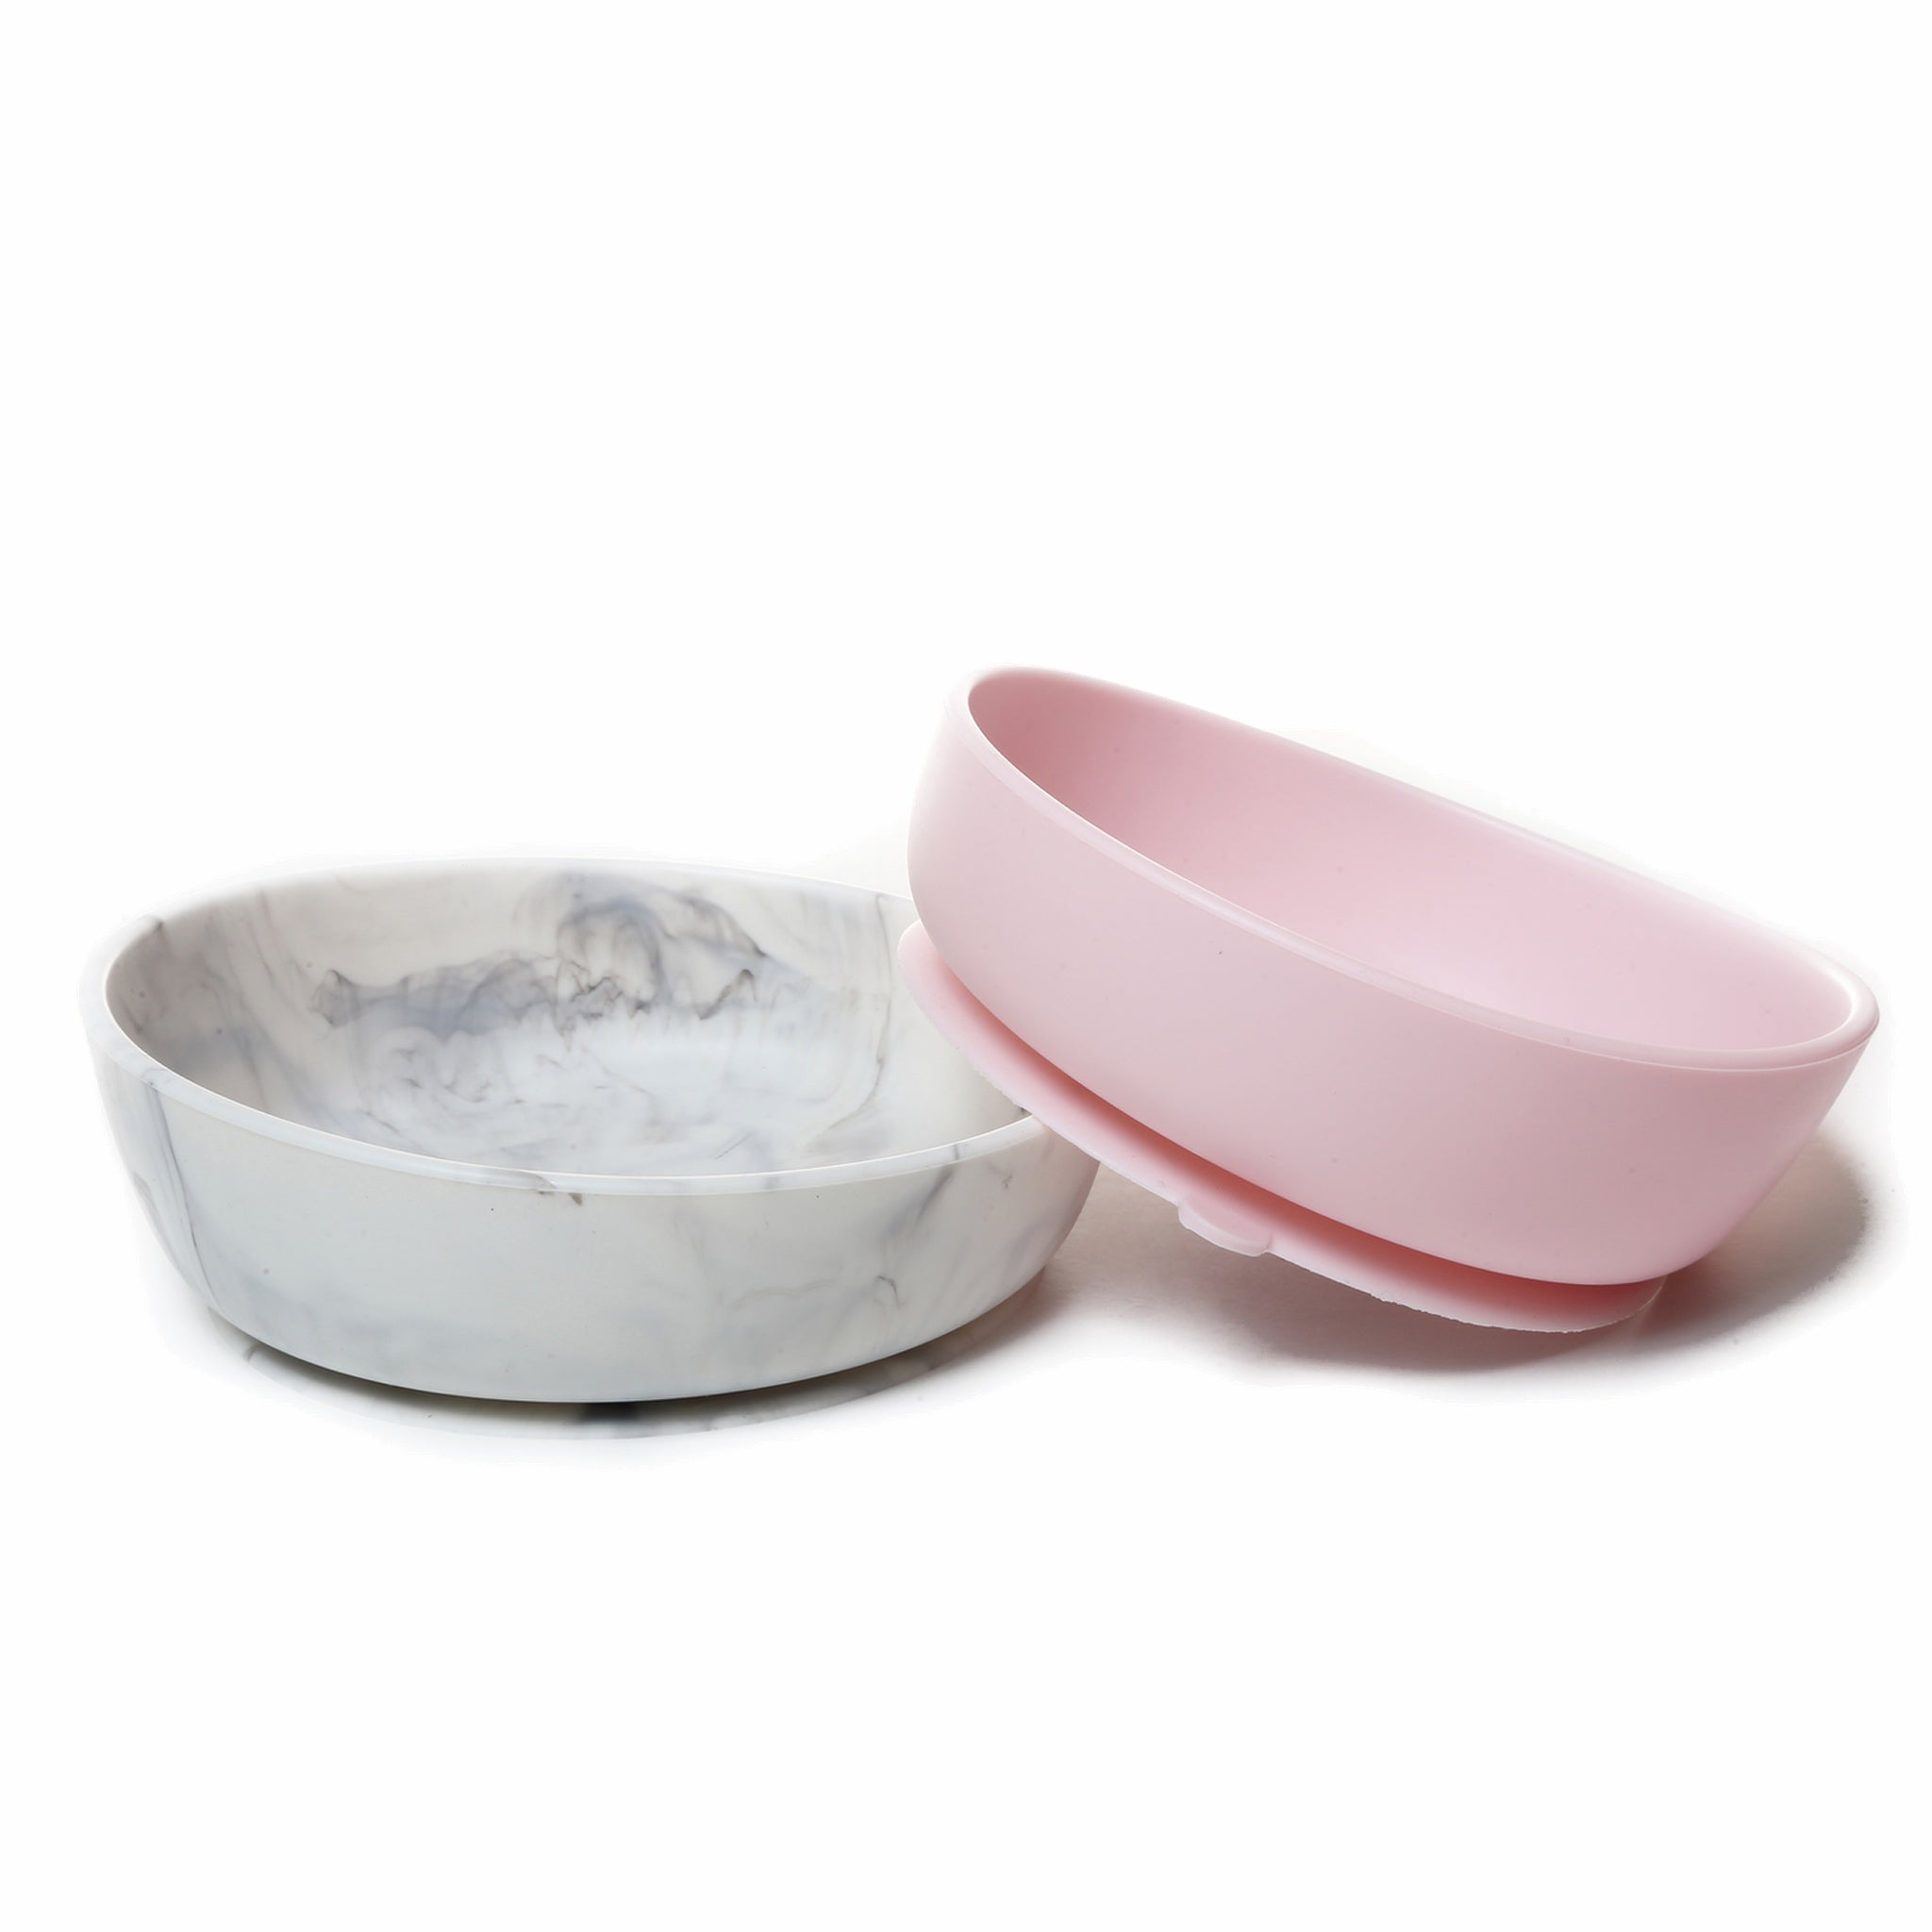 Silicone Baby Bowl Set - Blush & Marble